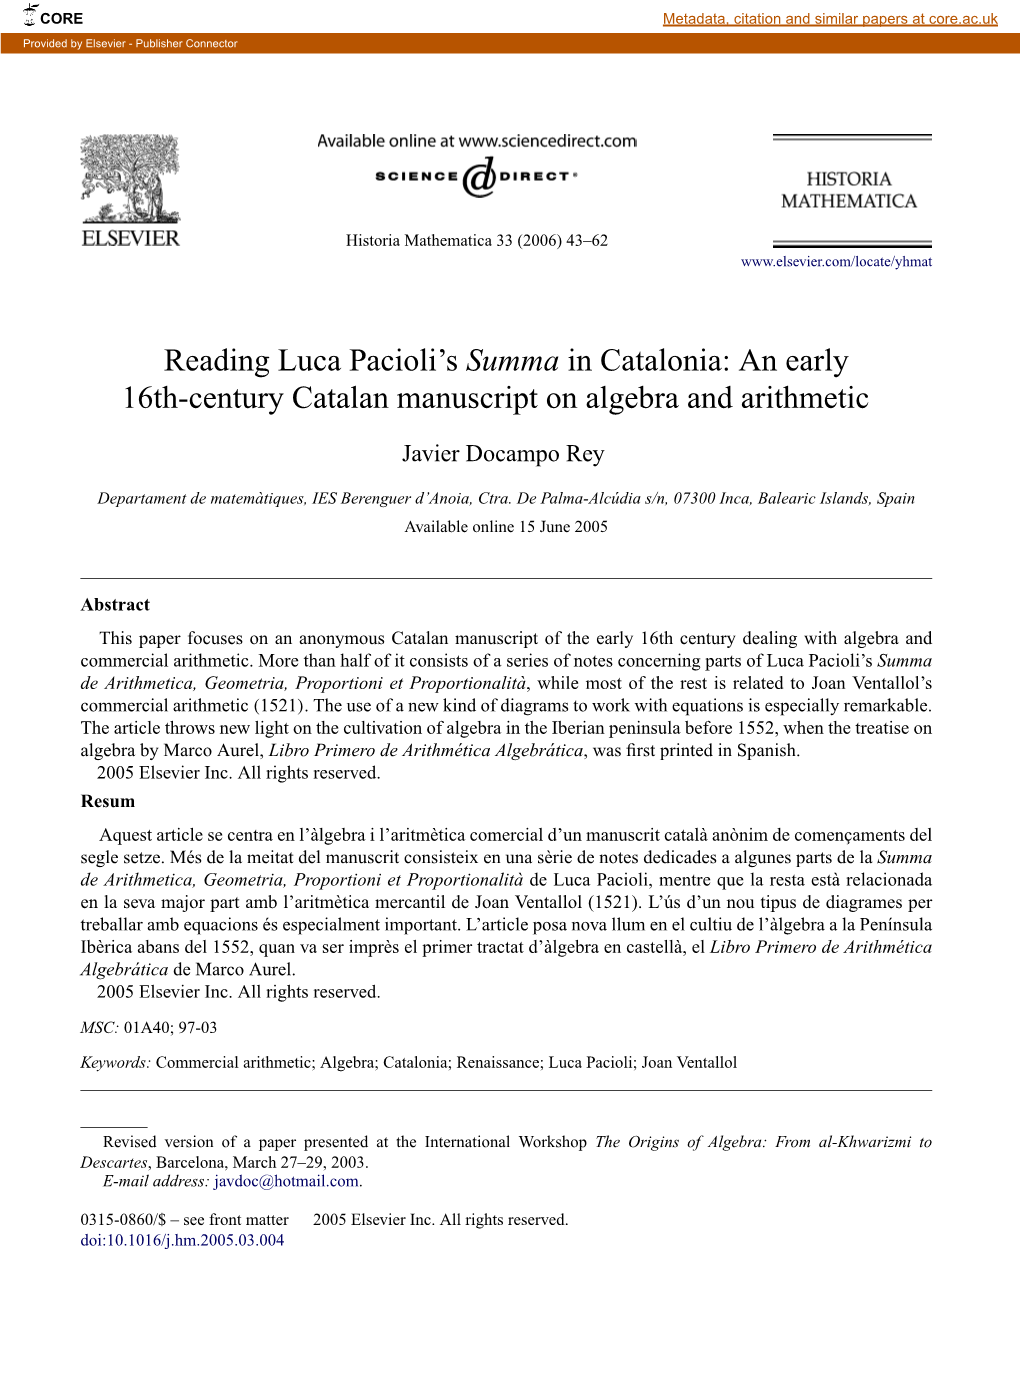 Reading Luca Pacioli's Summa in Catalonia: an Early 16Th